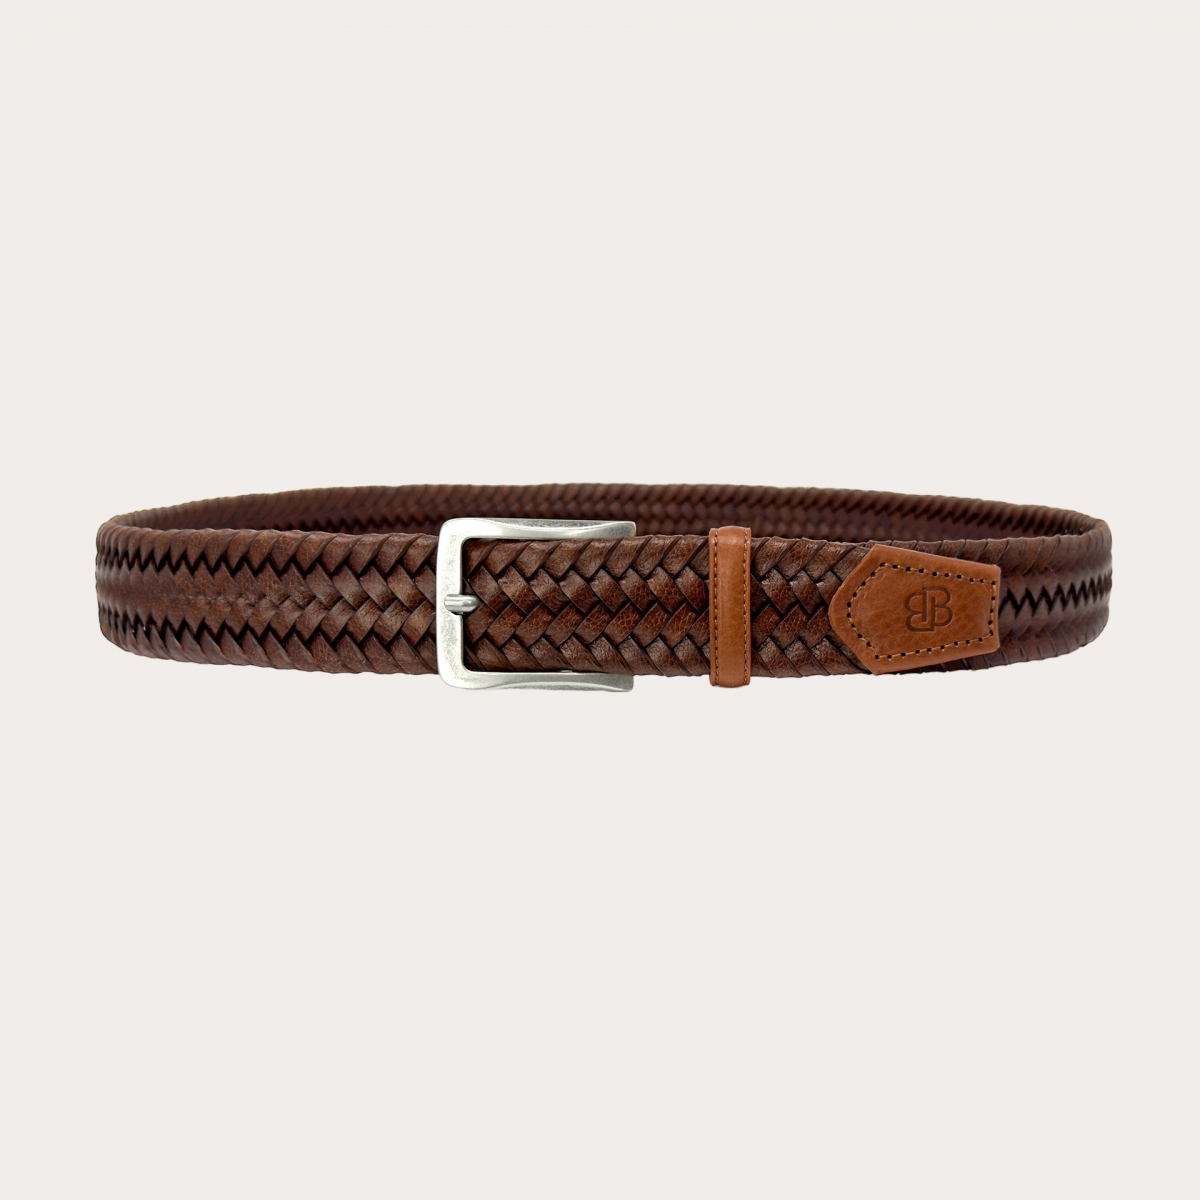 Woven belt in drummed leather, cognac brown